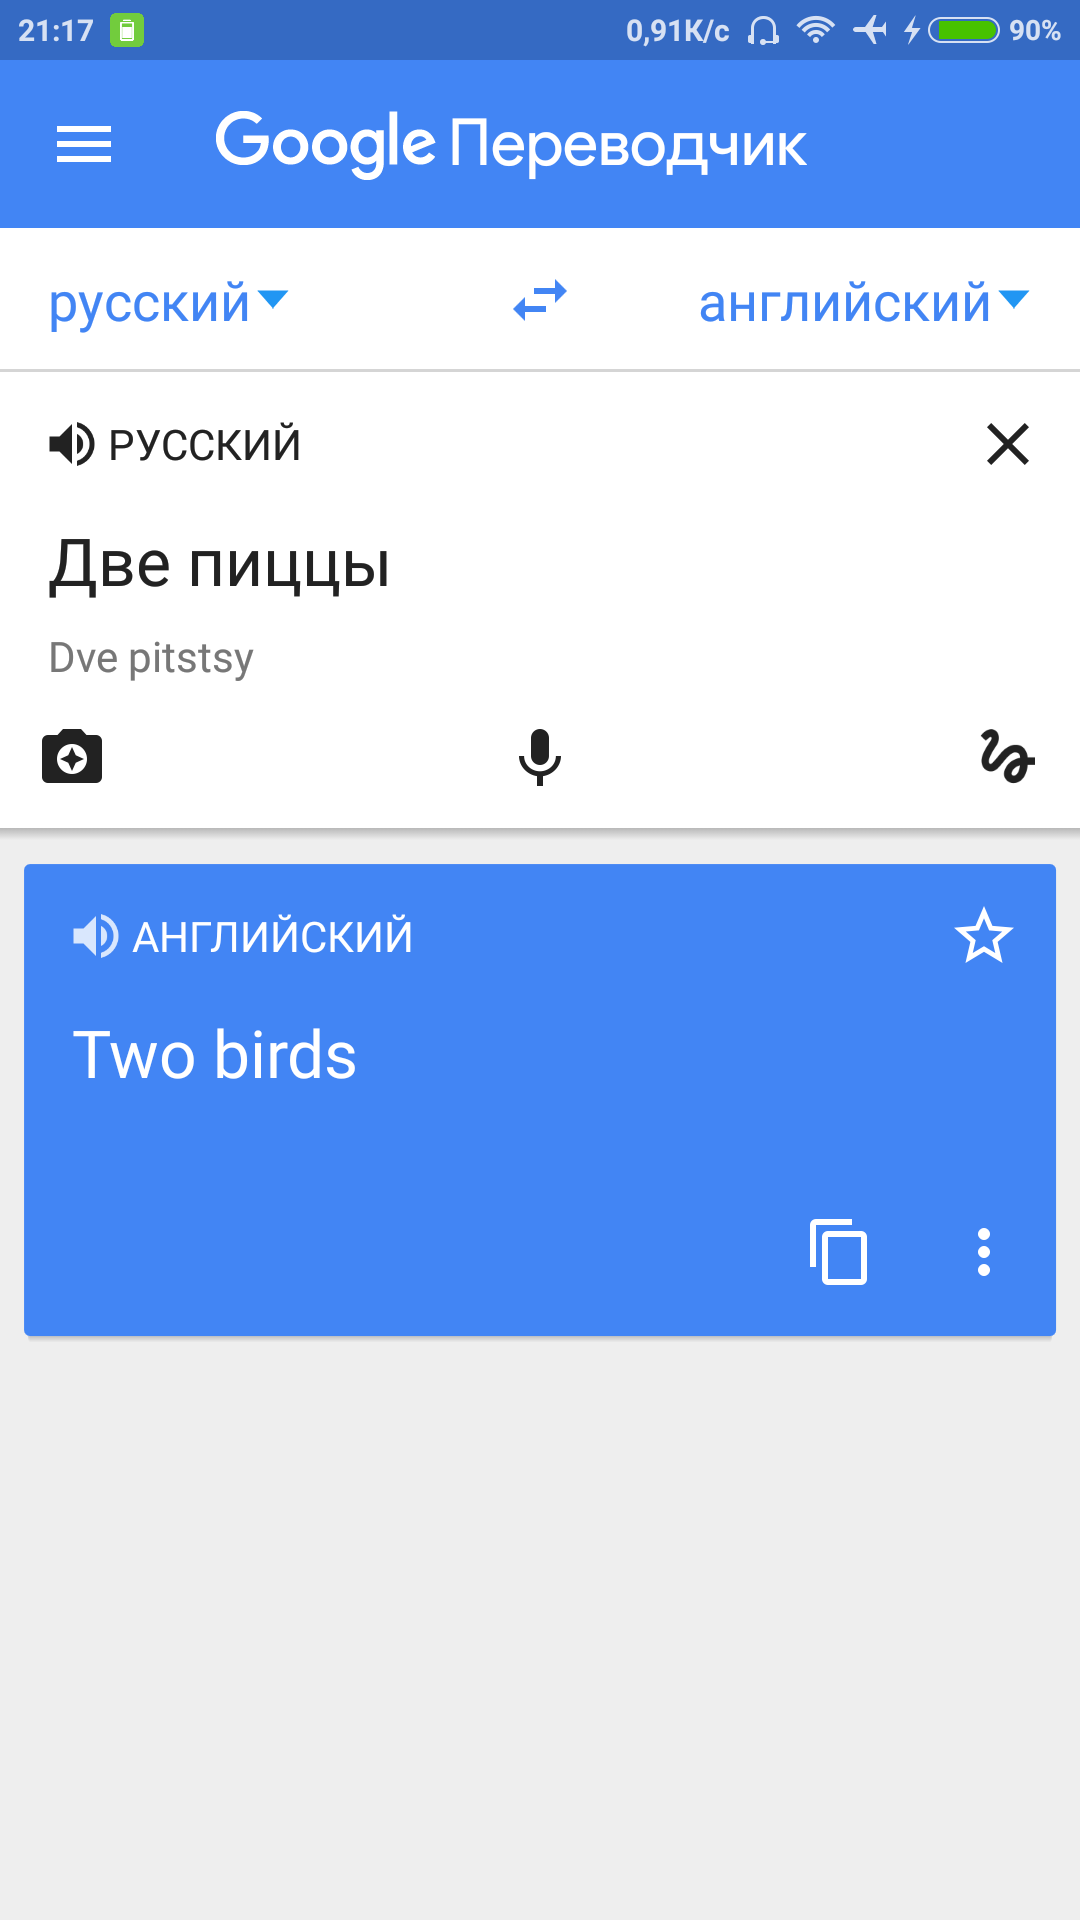 The subtleties of translation in Google translator - Google, Google translate, Pizza, Birds, Longpost